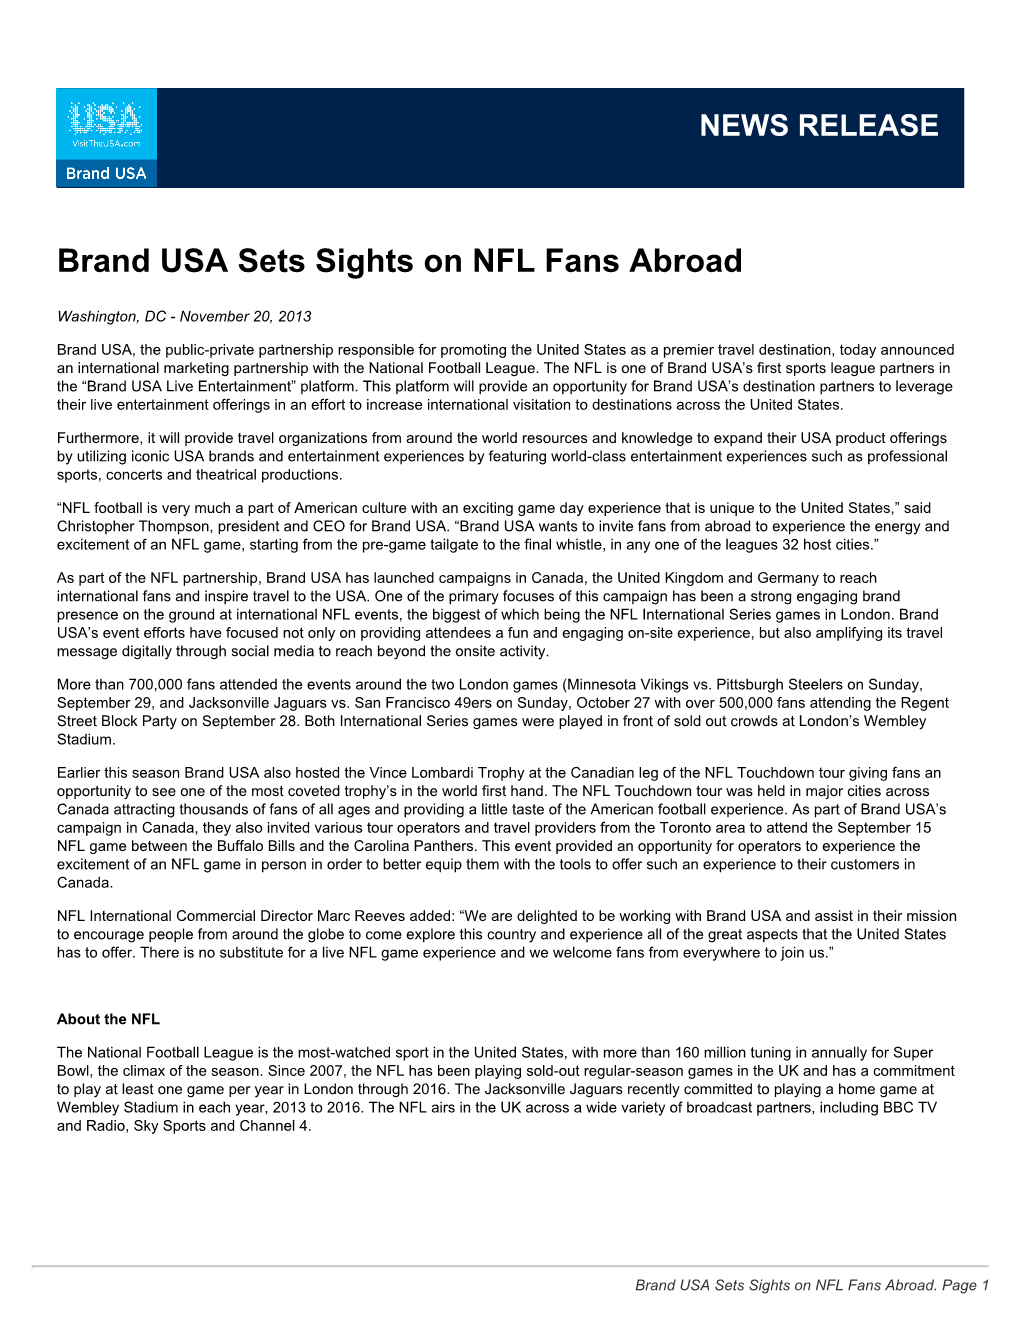 Brand USA Sets Sights on NFL Fans Abroad